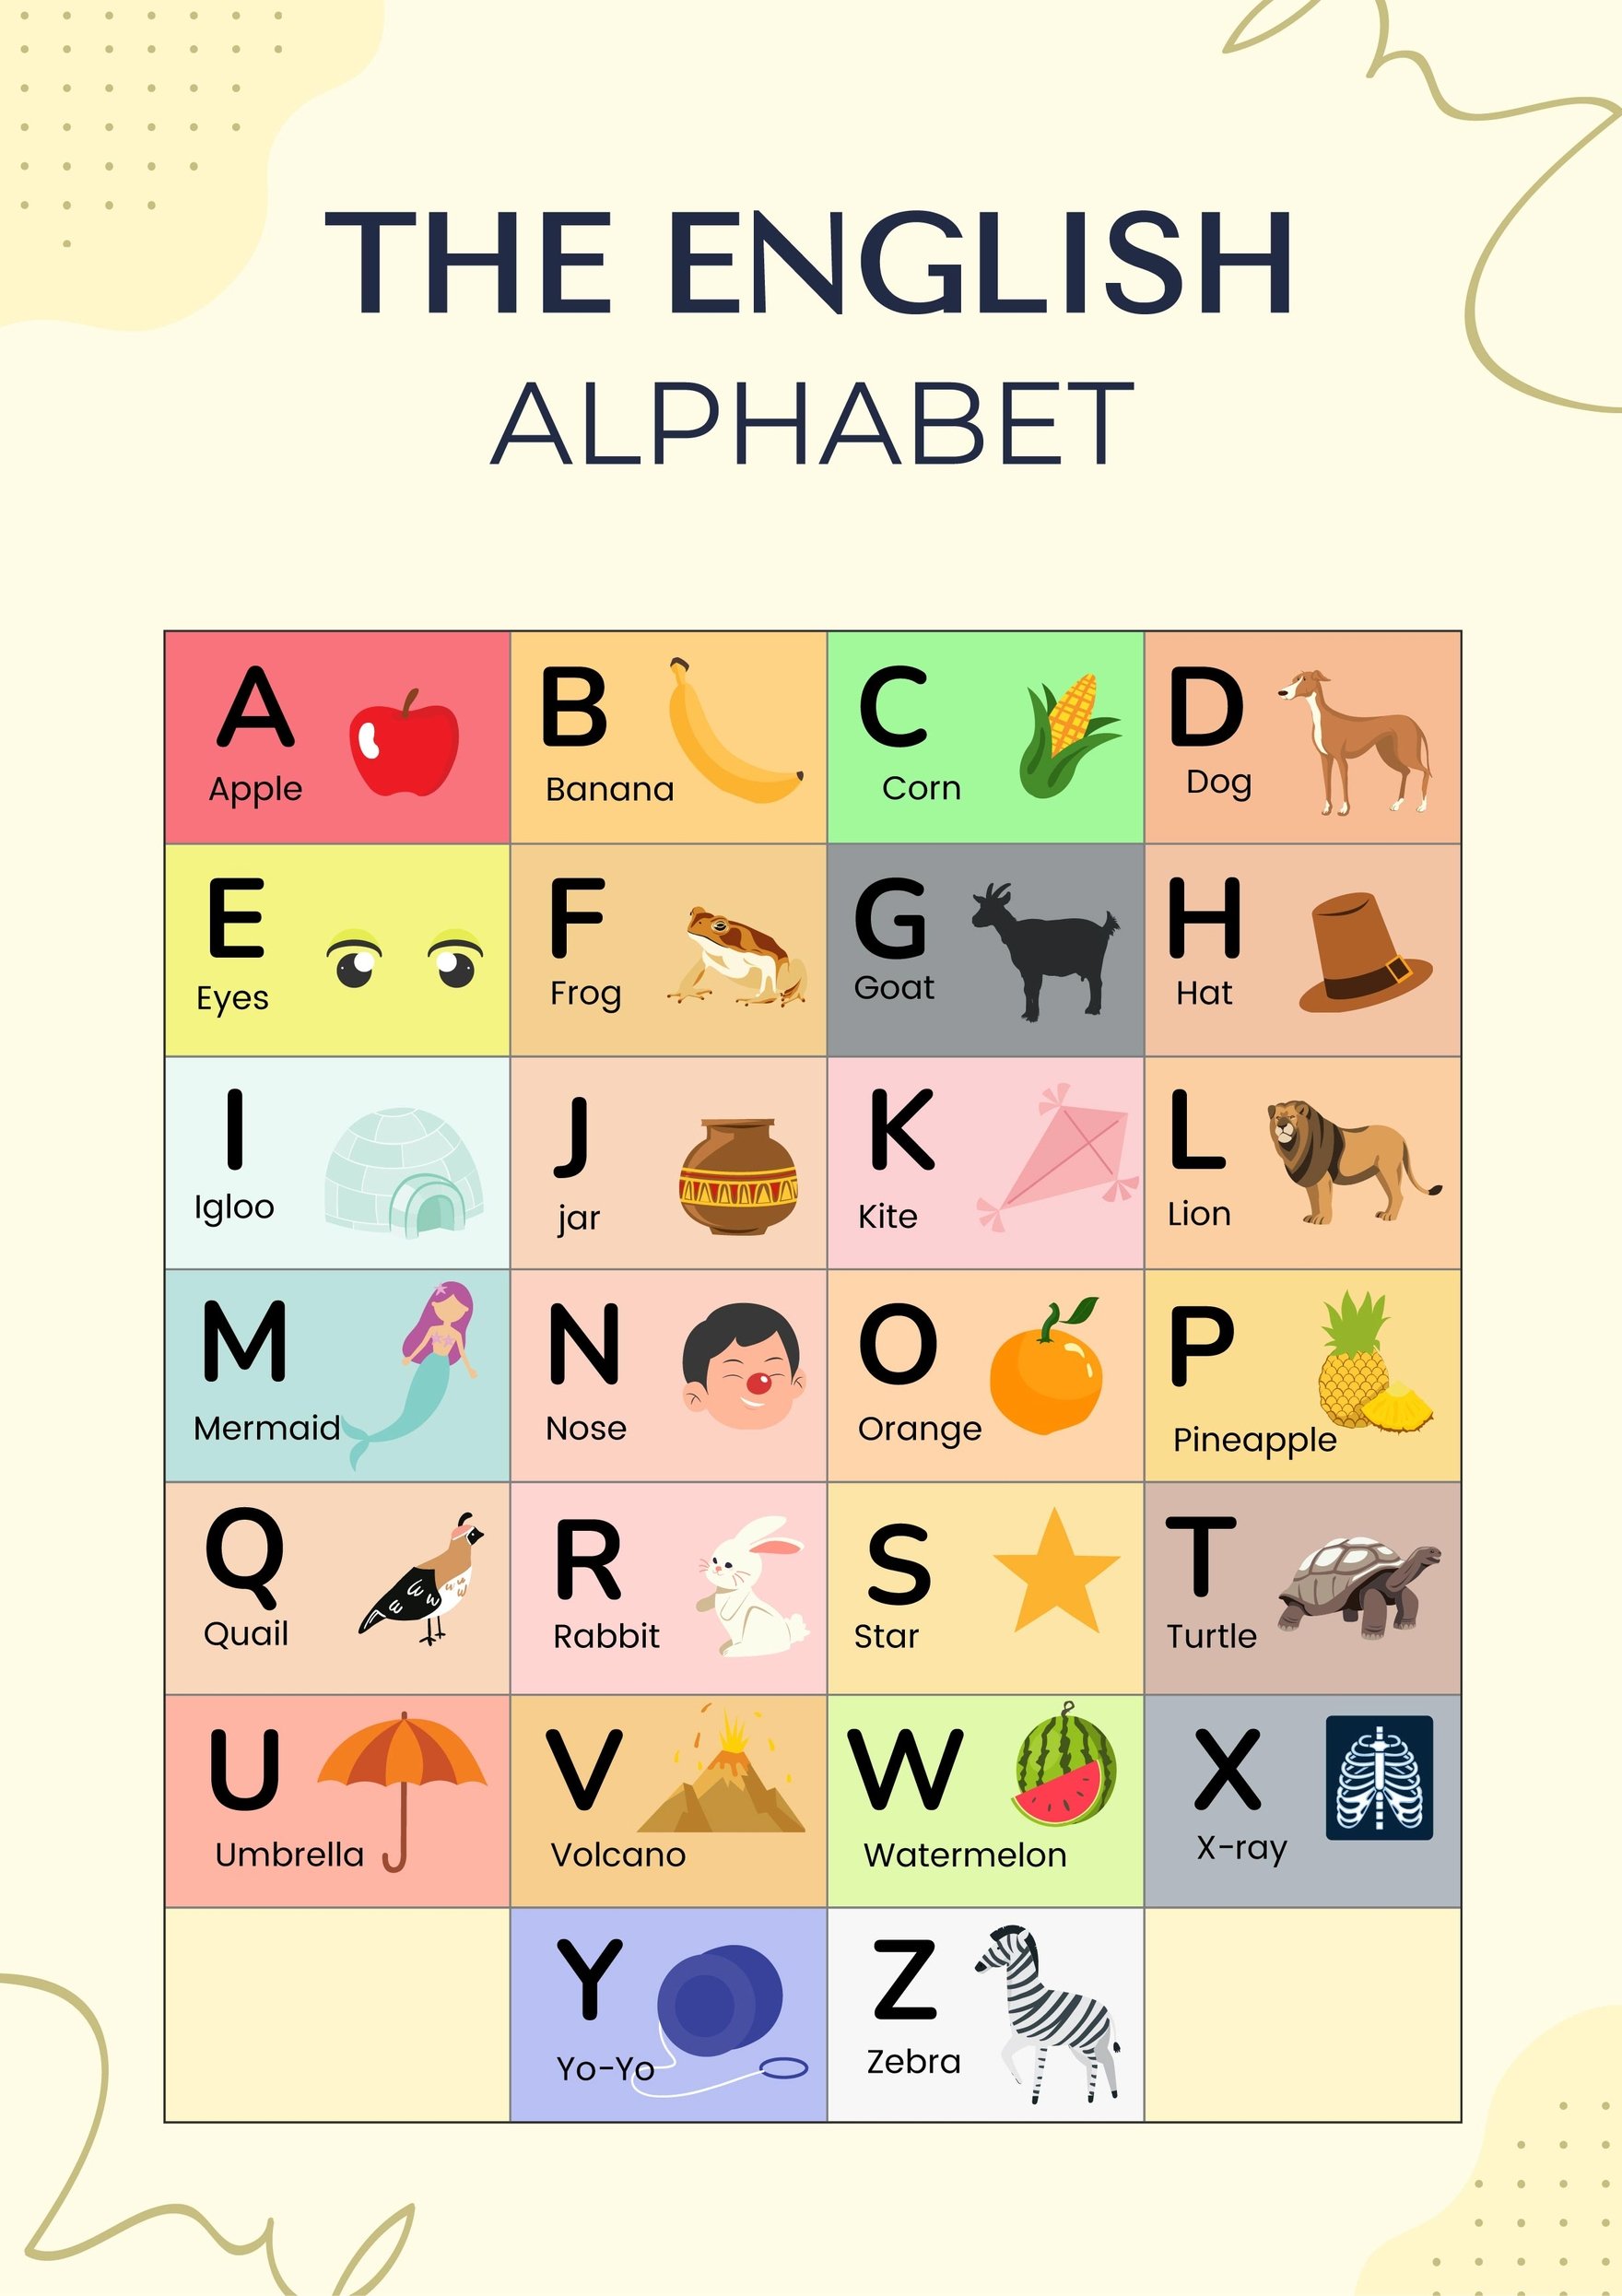 boho-alphabet-chart-in-illustrator-pdf-download-template